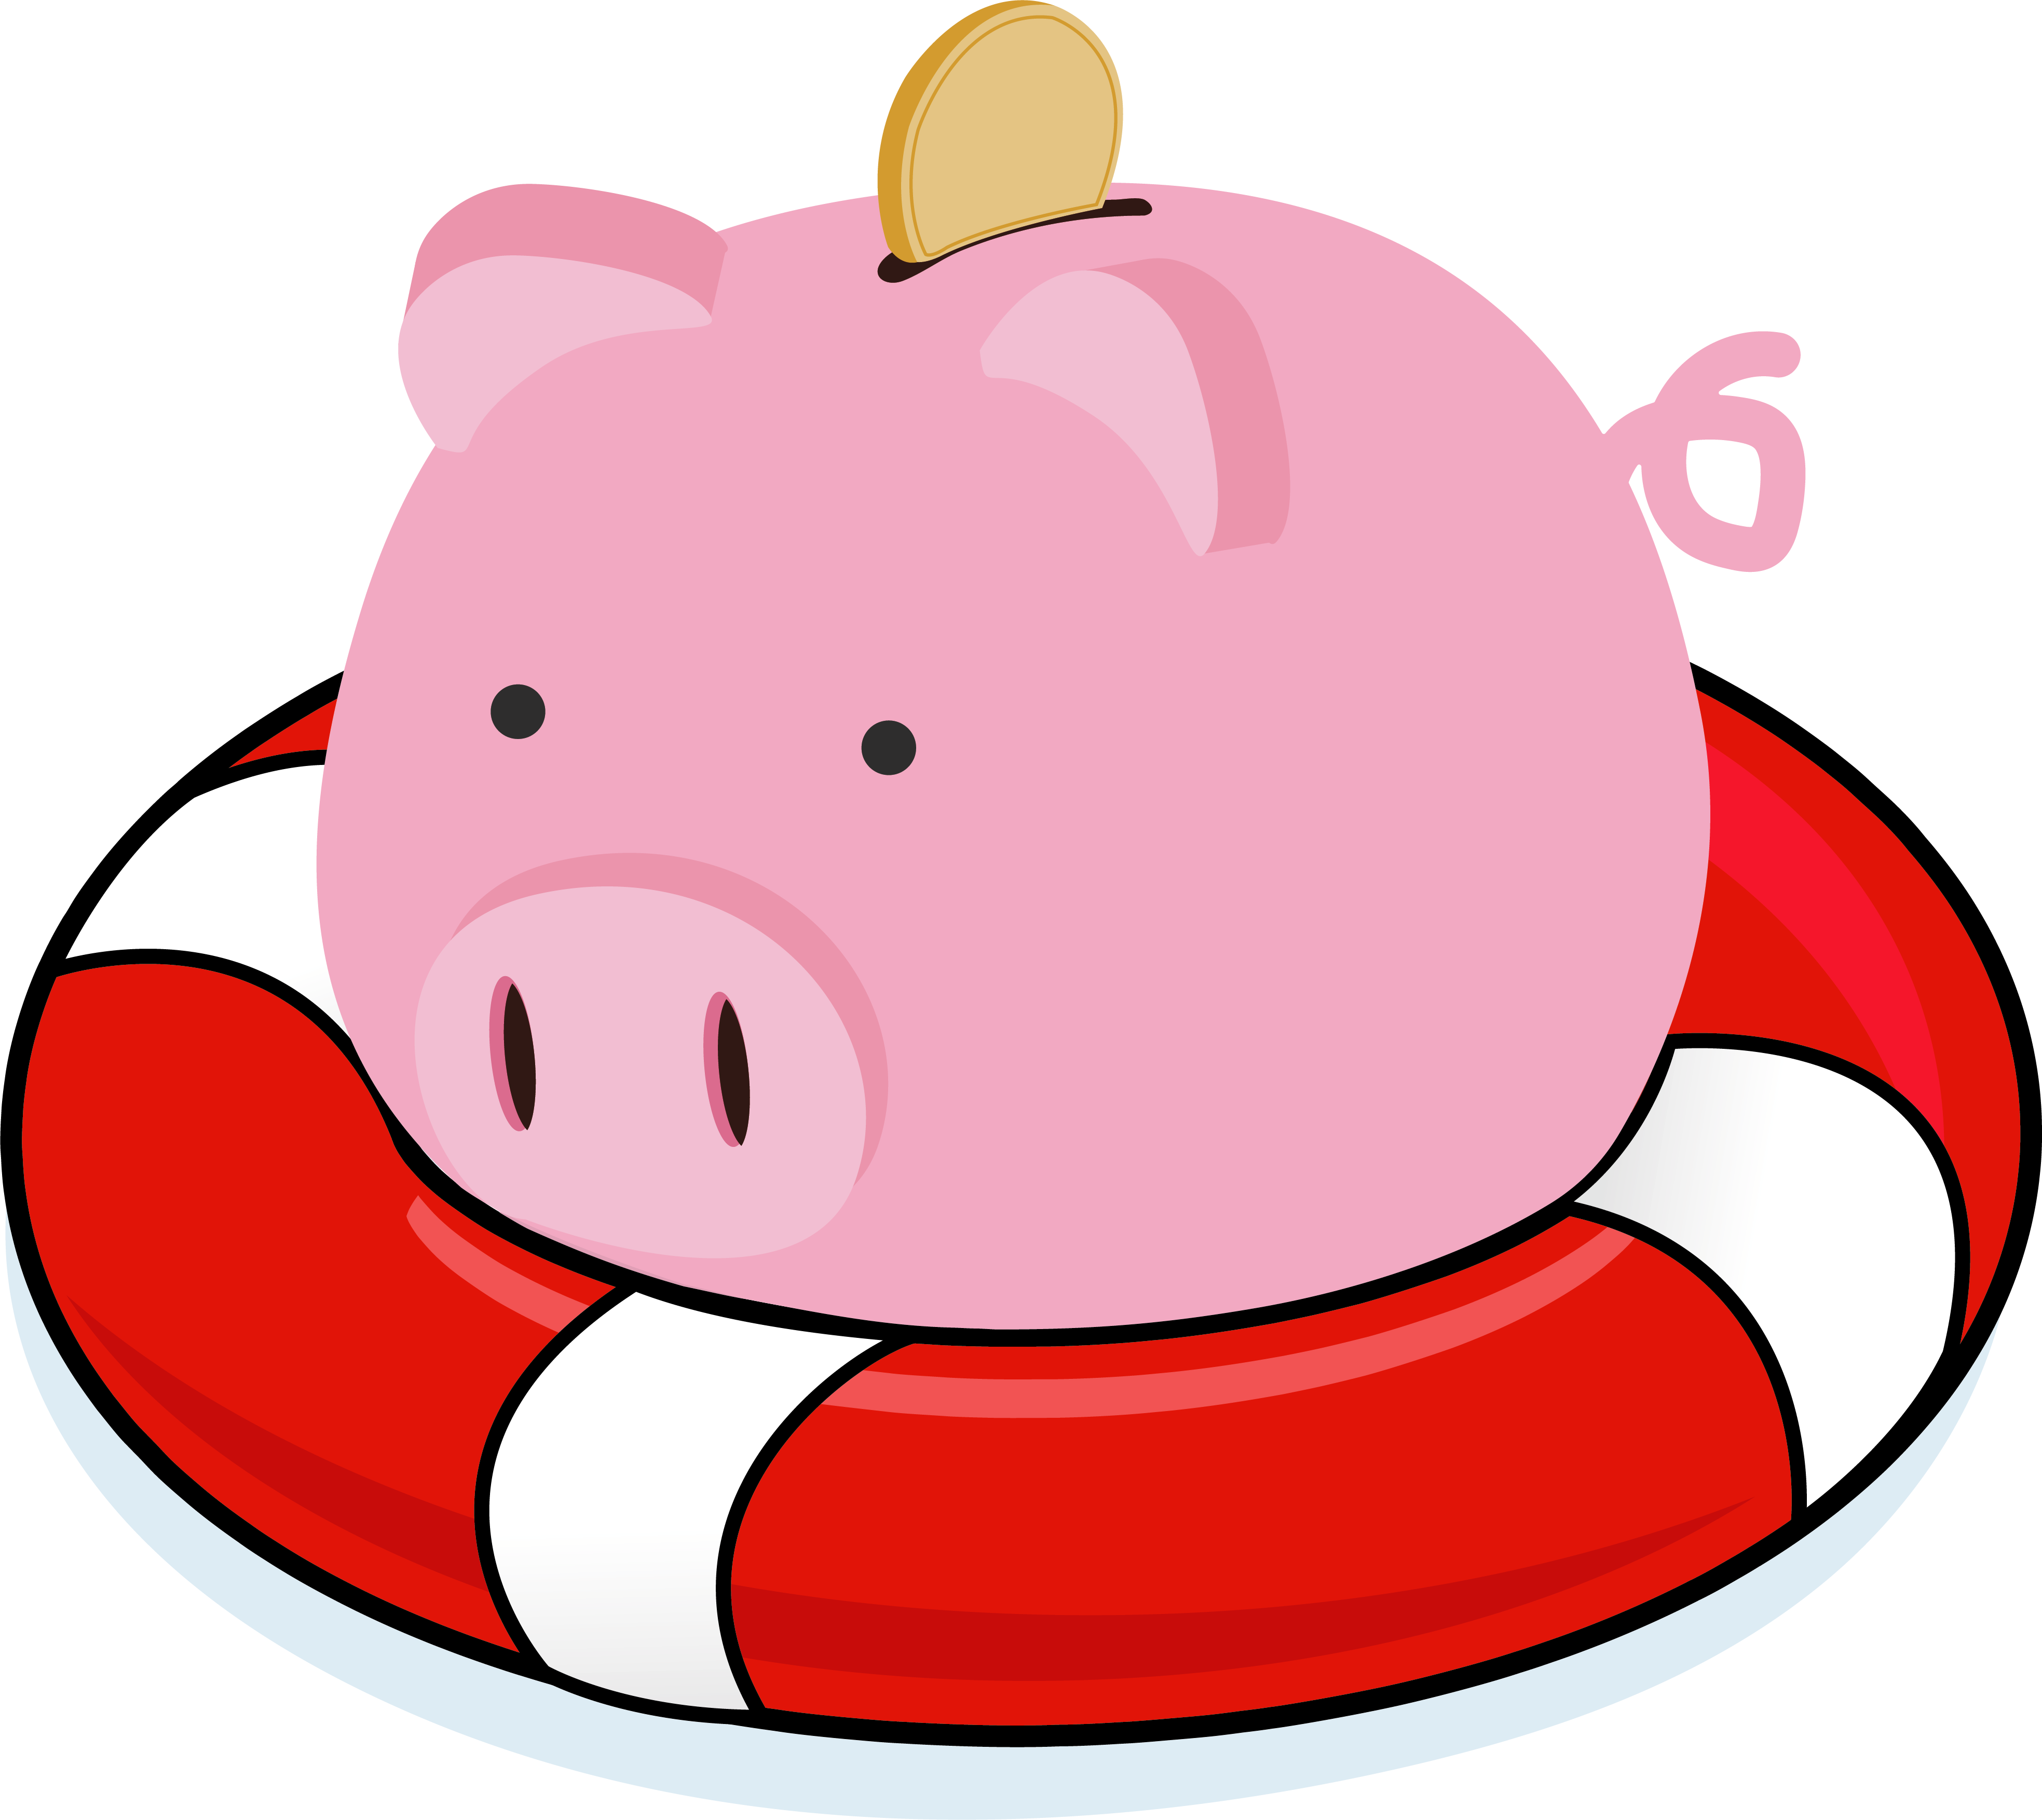 Piggy bank in a life raft